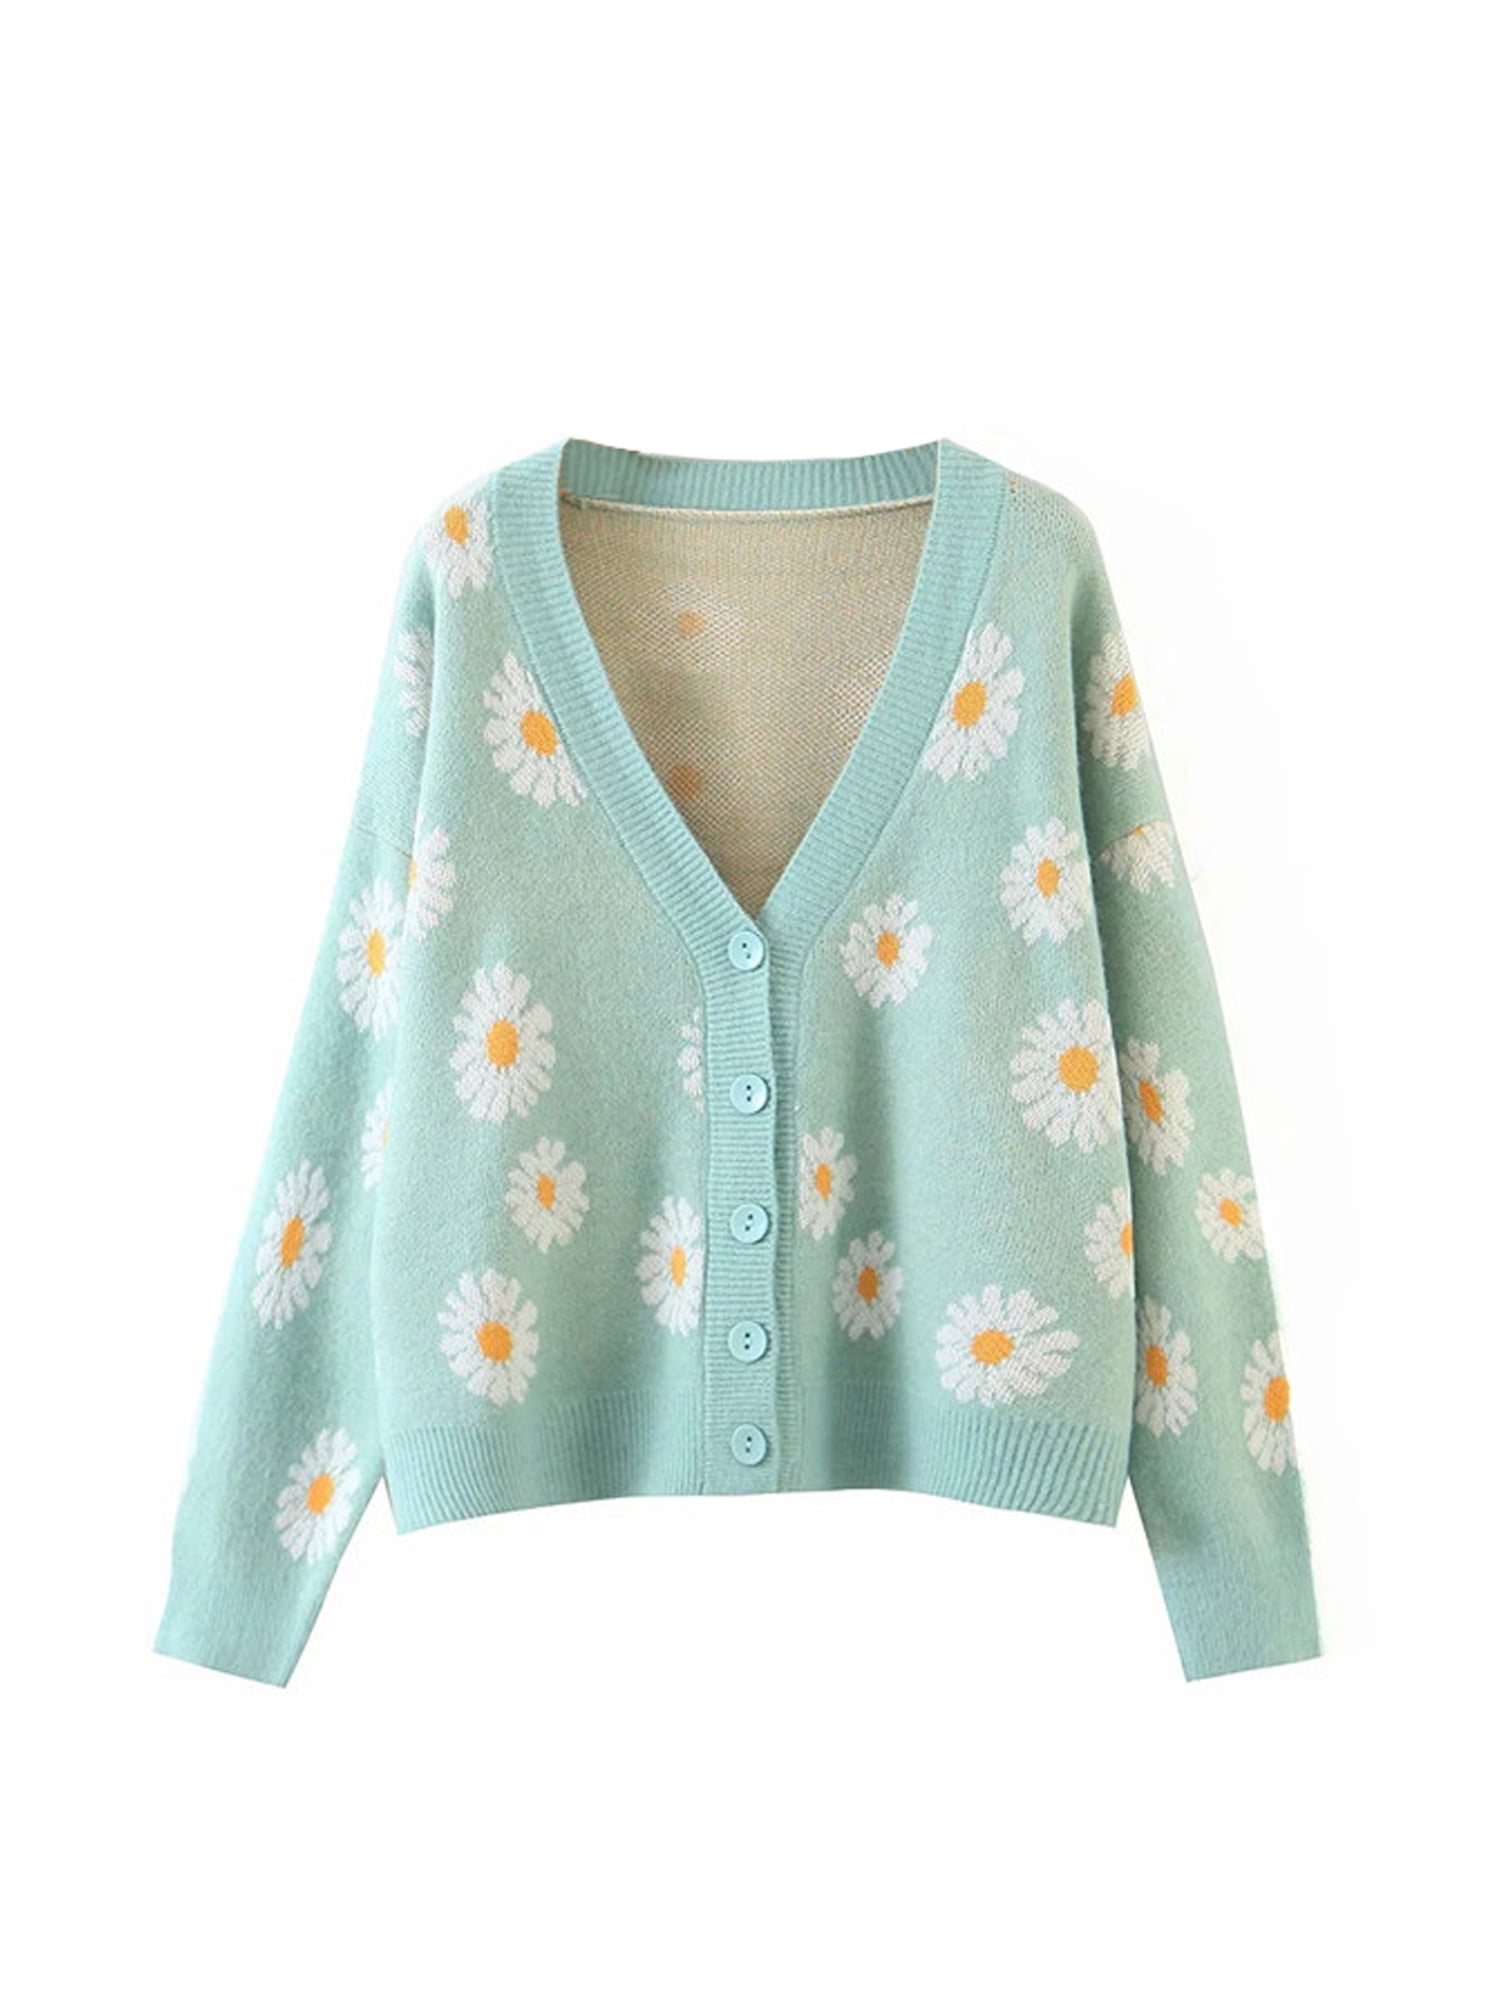 TOPGOD Women Little Daisy Sweater V Cardigan, Lossen Knit Long Casual Sleeve Neck Loose Coat Floral